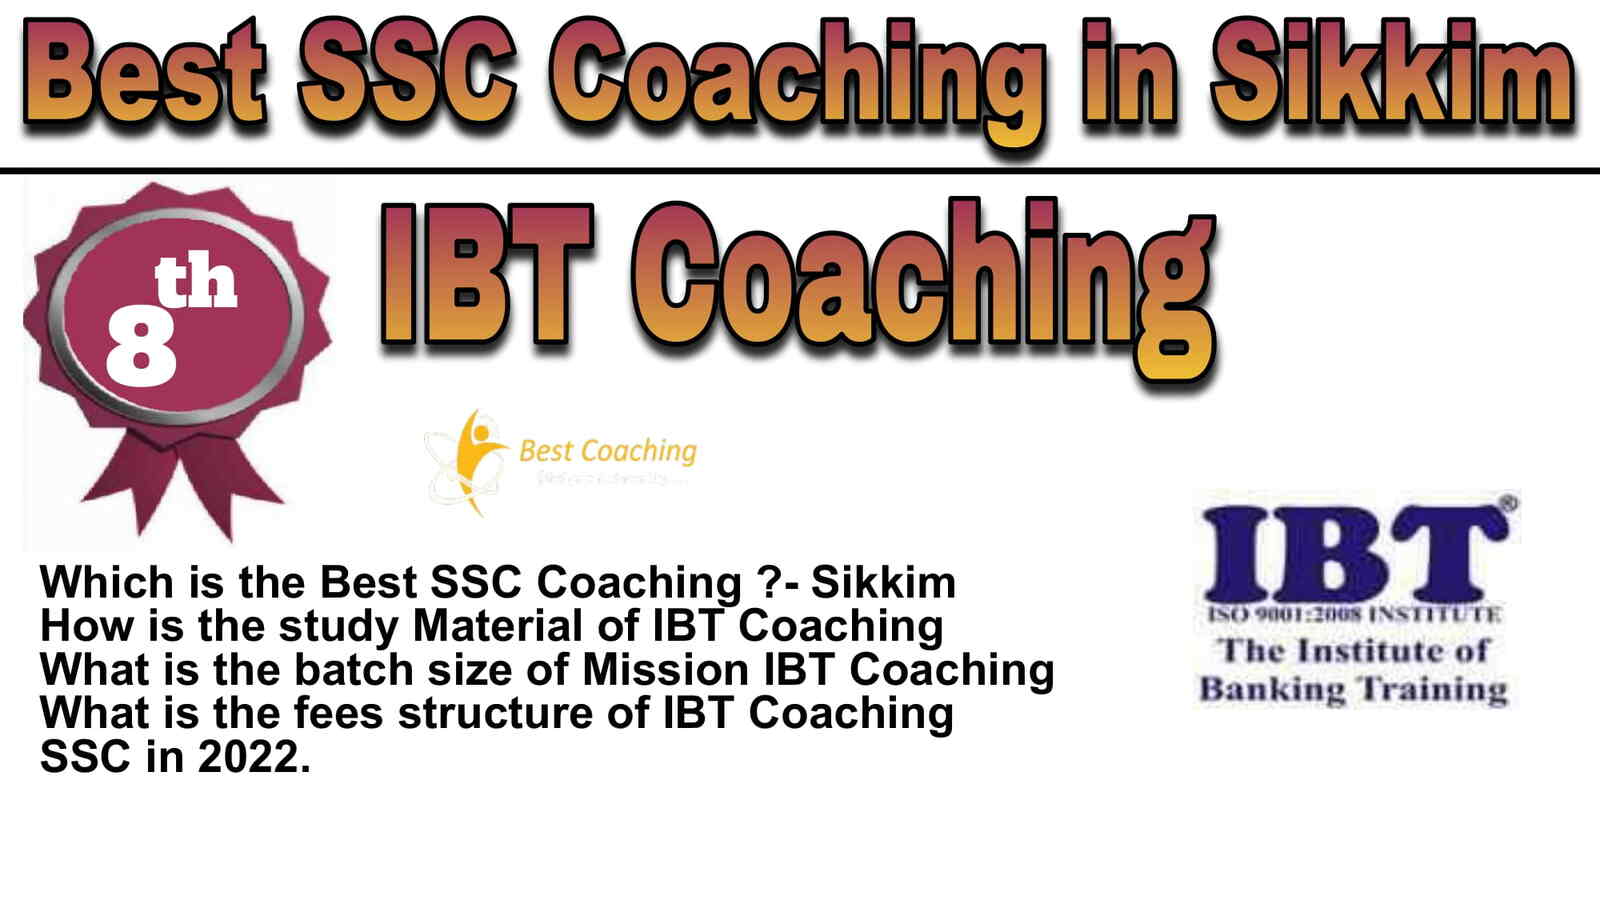 Rank 8 Best SSC Coaching in Sikkim